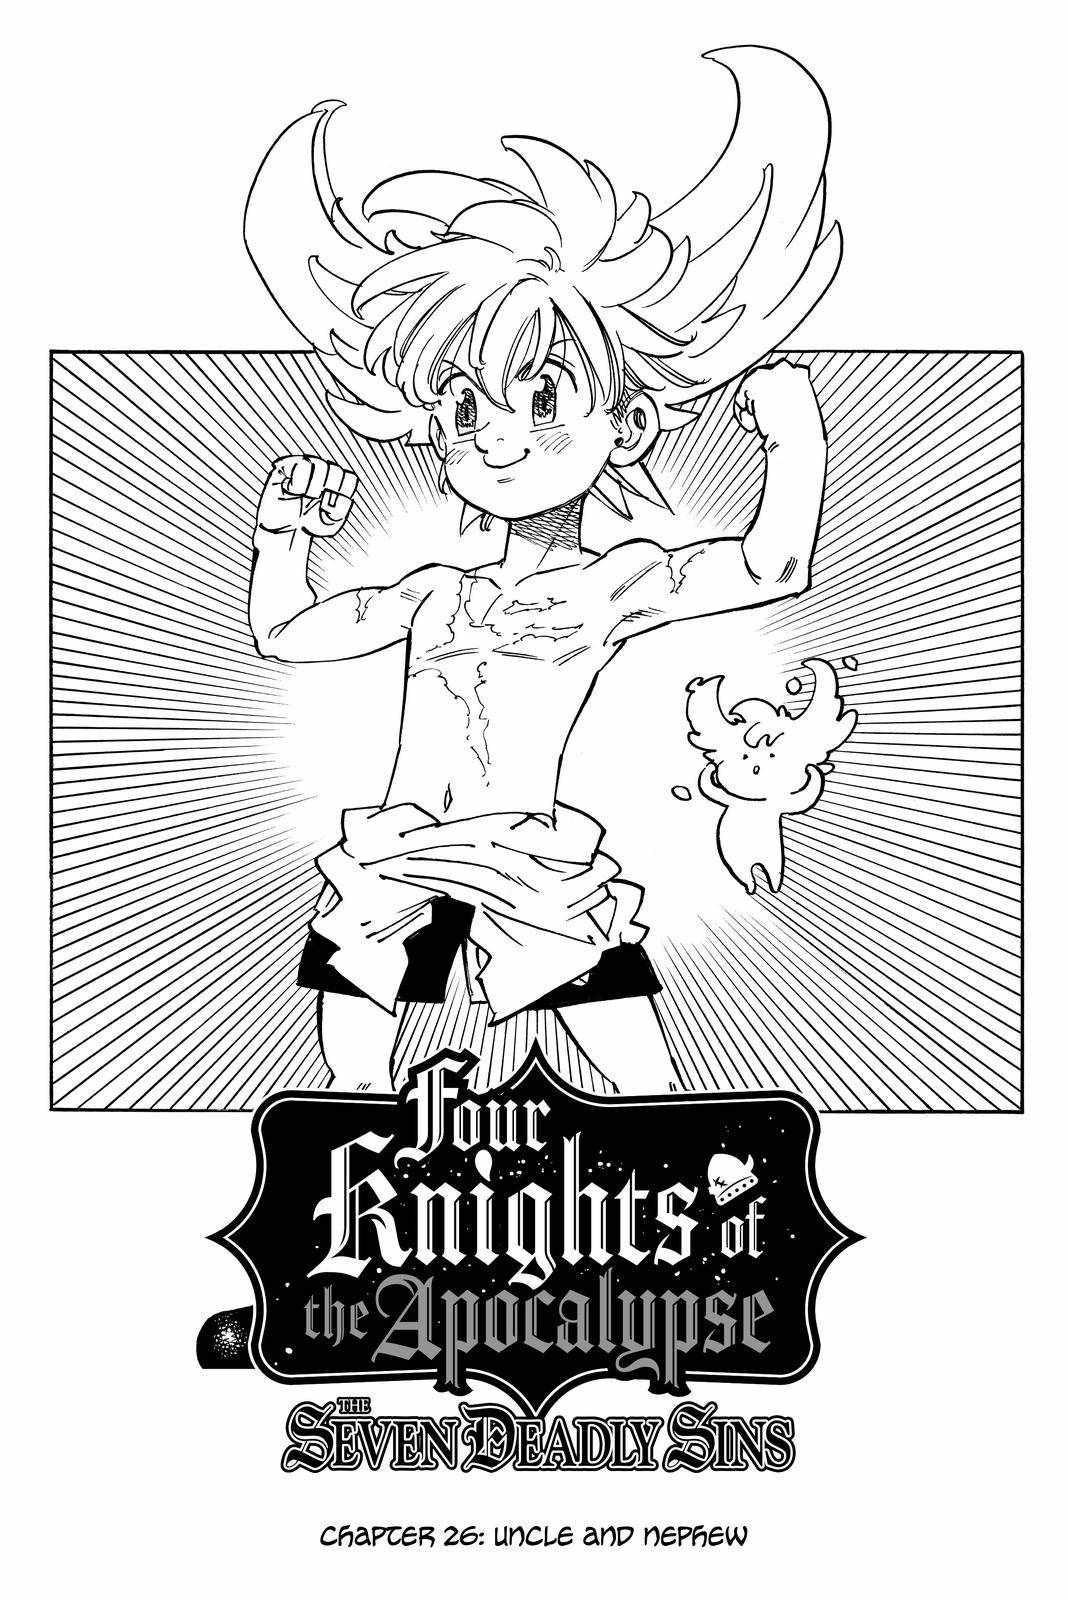 Read Knights Magic Chapter 81 - MangaFreak